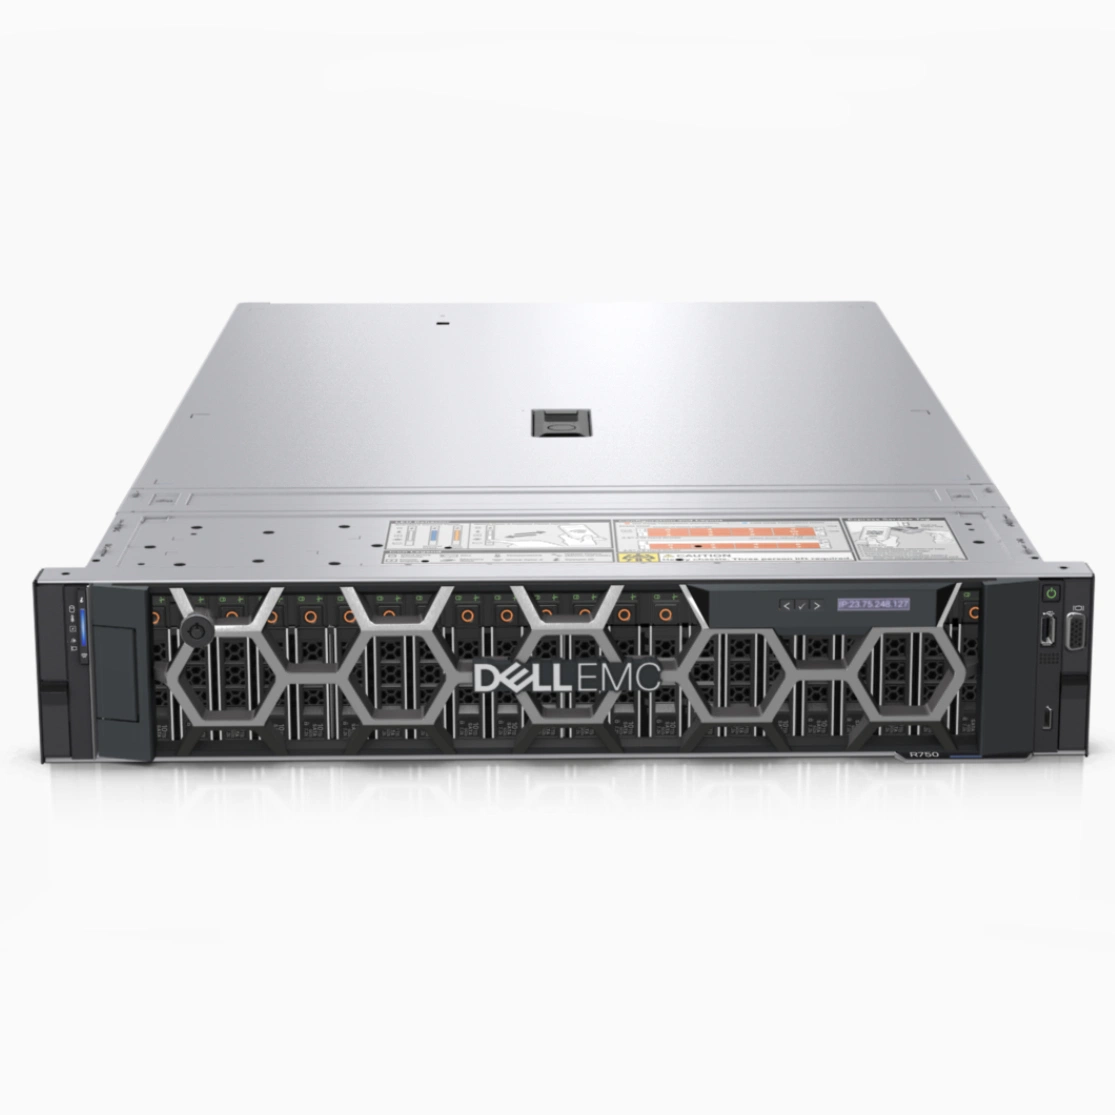 DELL Poweredge R750 2u Rack Server for Computer Server System Network R750xs Storage Server